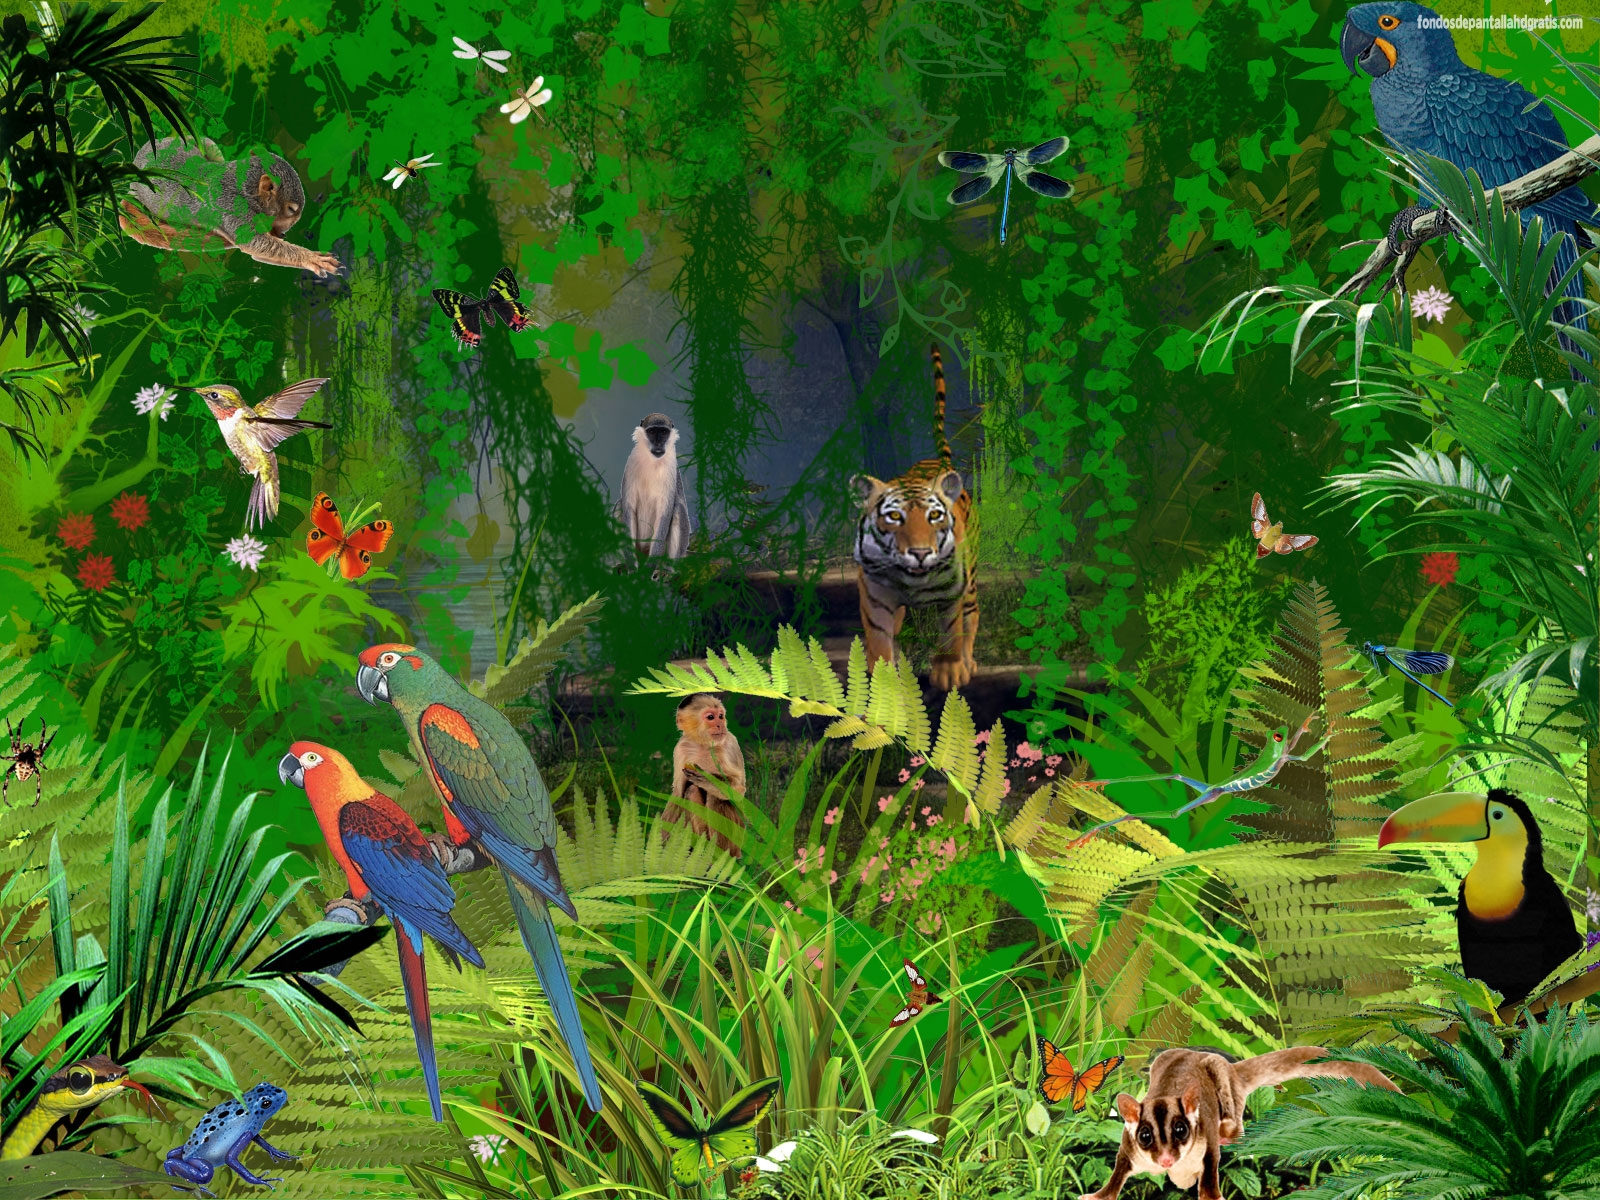 Descargar imagen jungle animals wallpaper hd widescreen Gratis 10051